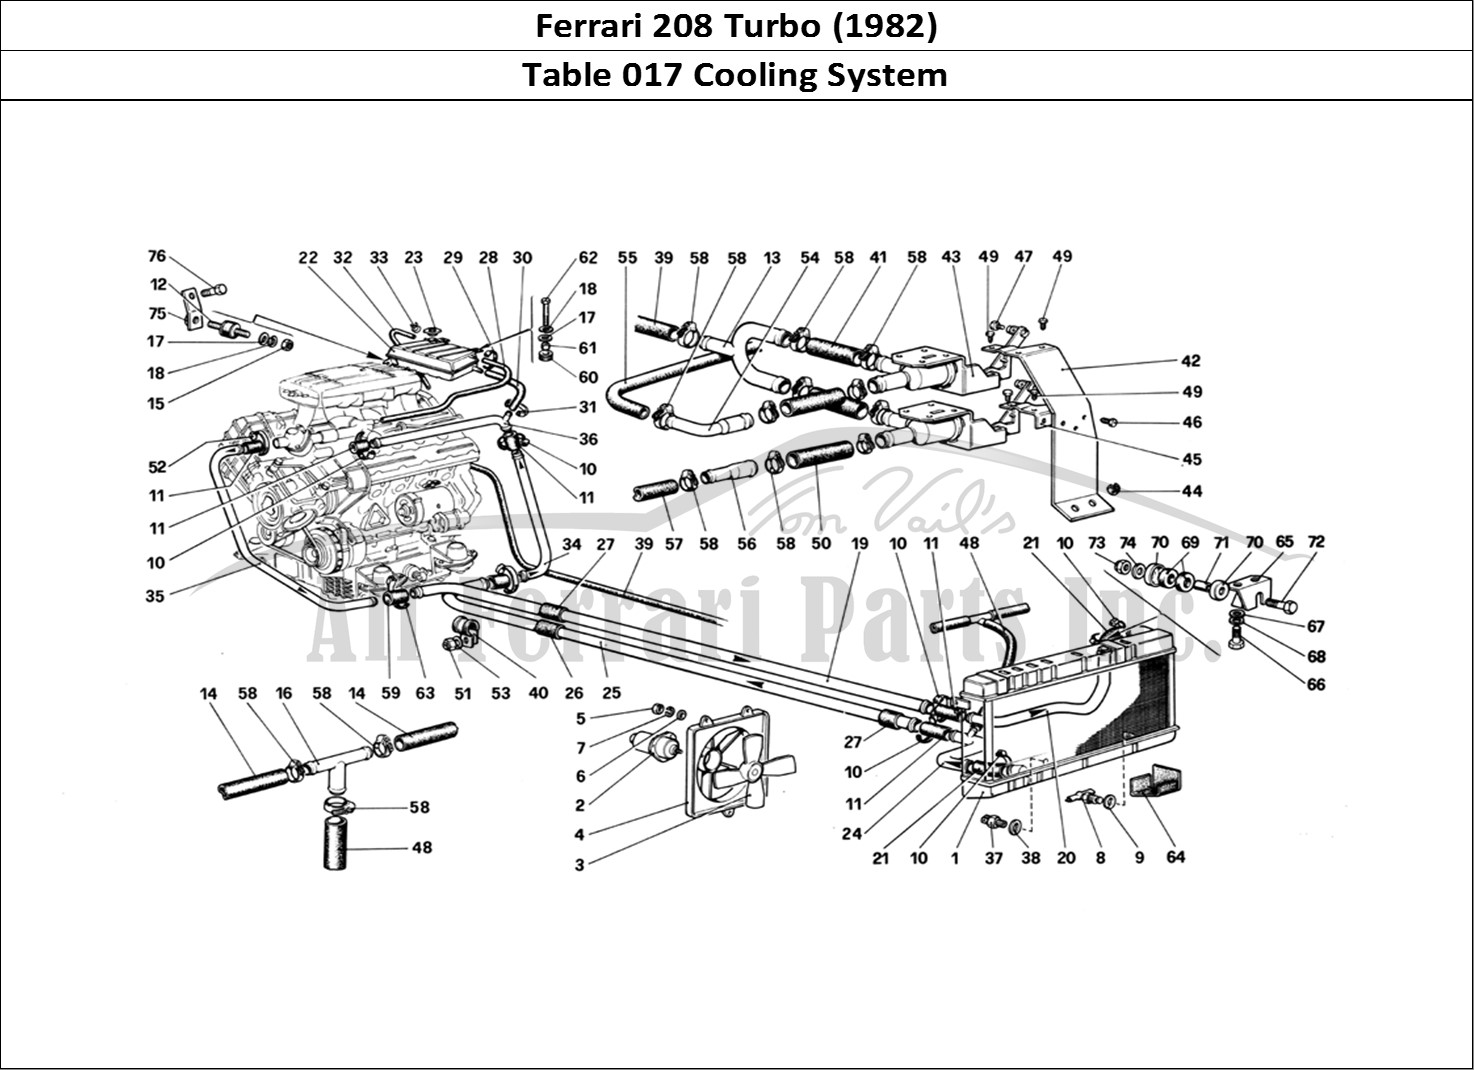 Ferrari Parts Ferrari 208 Turbo (1982) Page 017 Cooling System